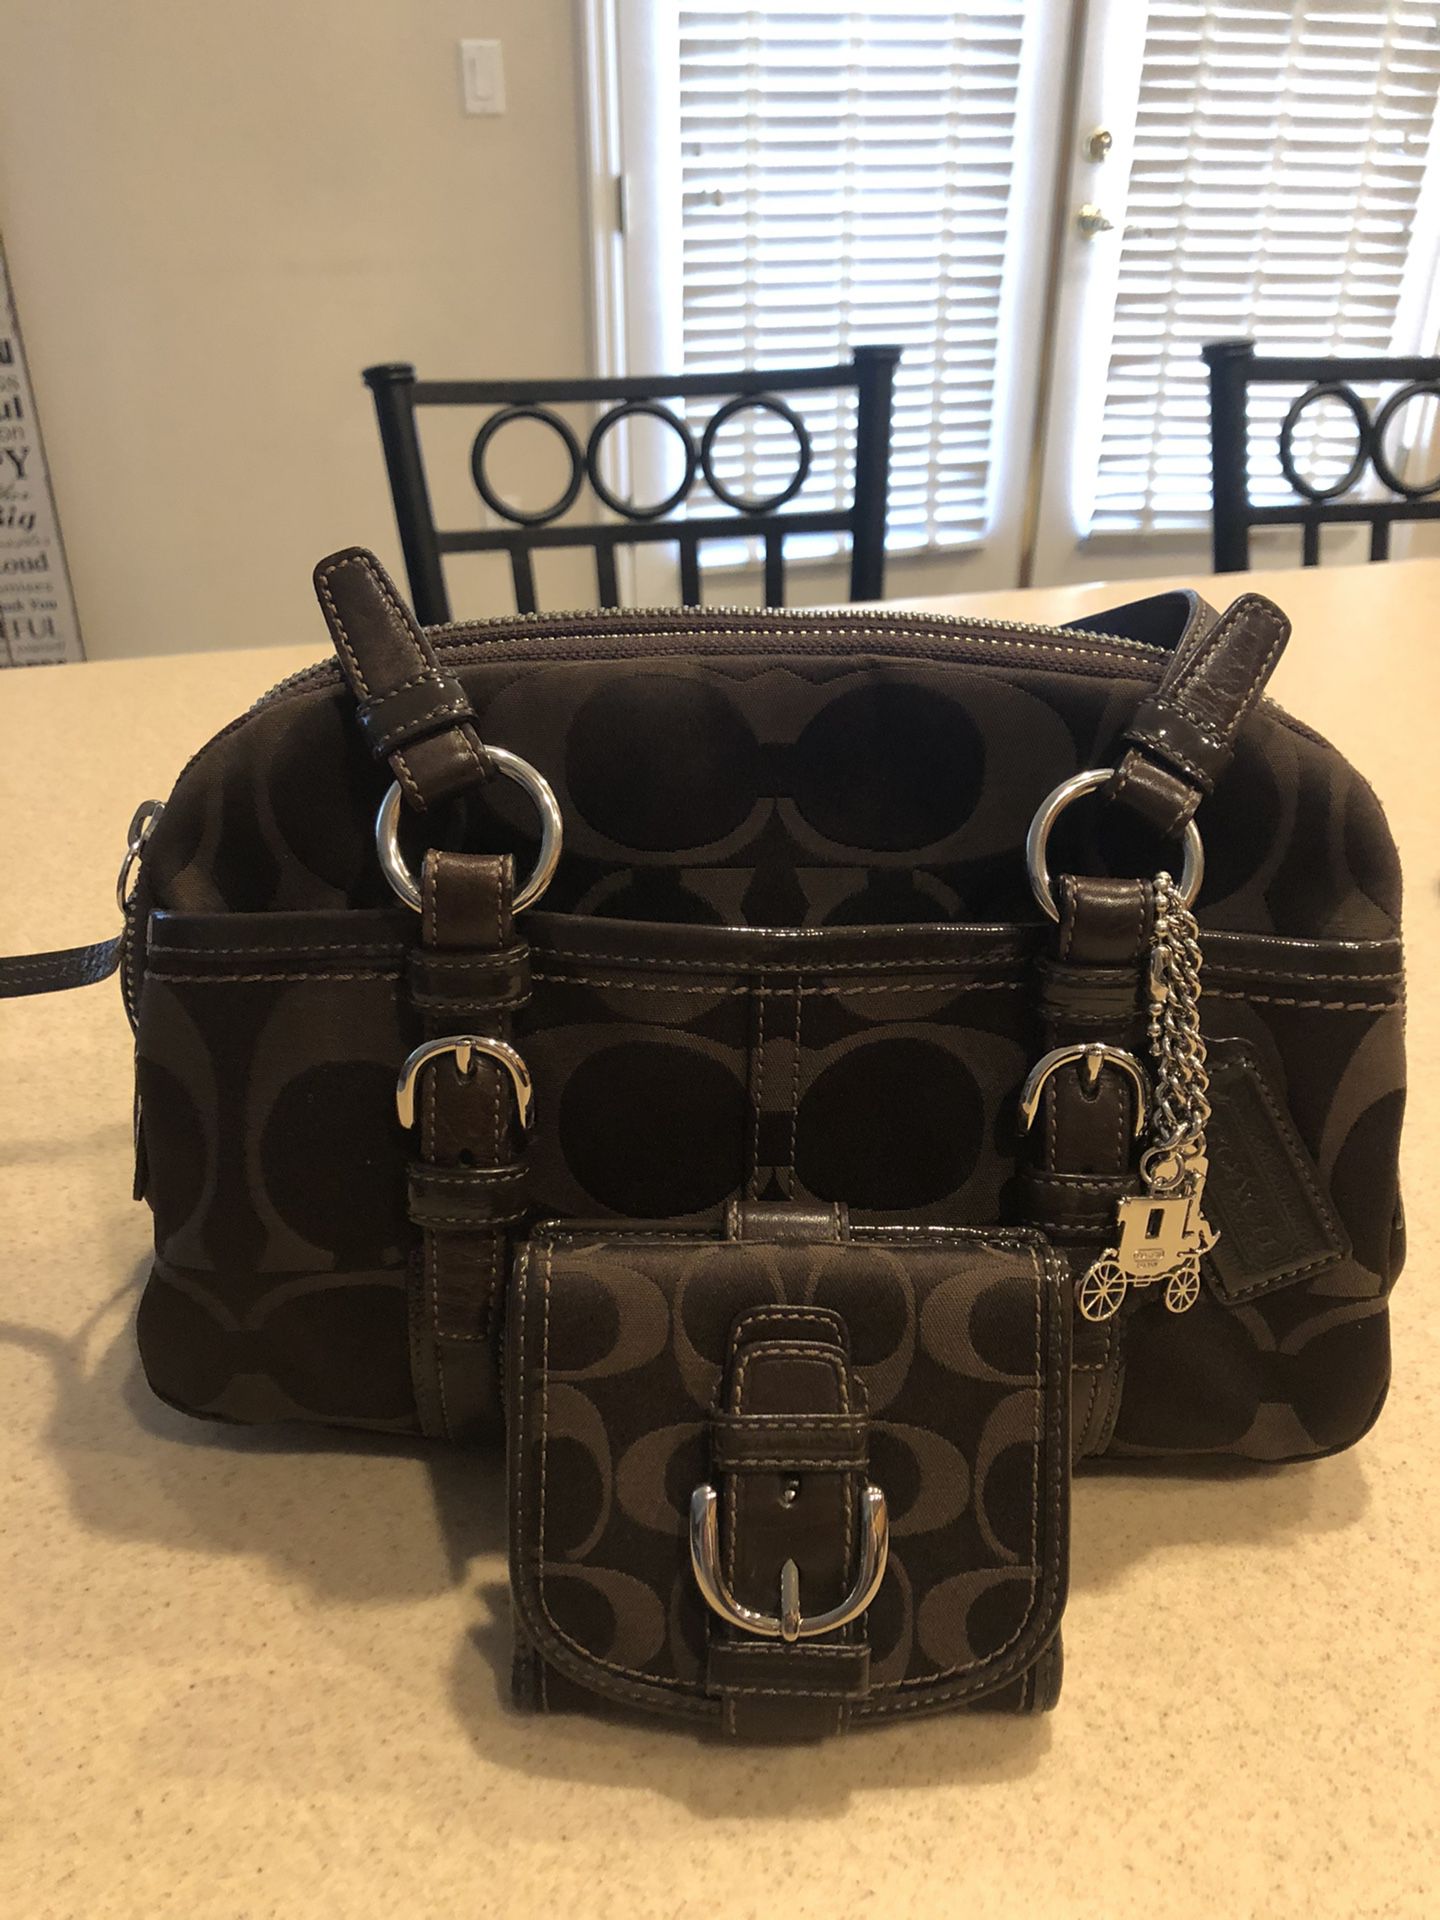 Coach purse set